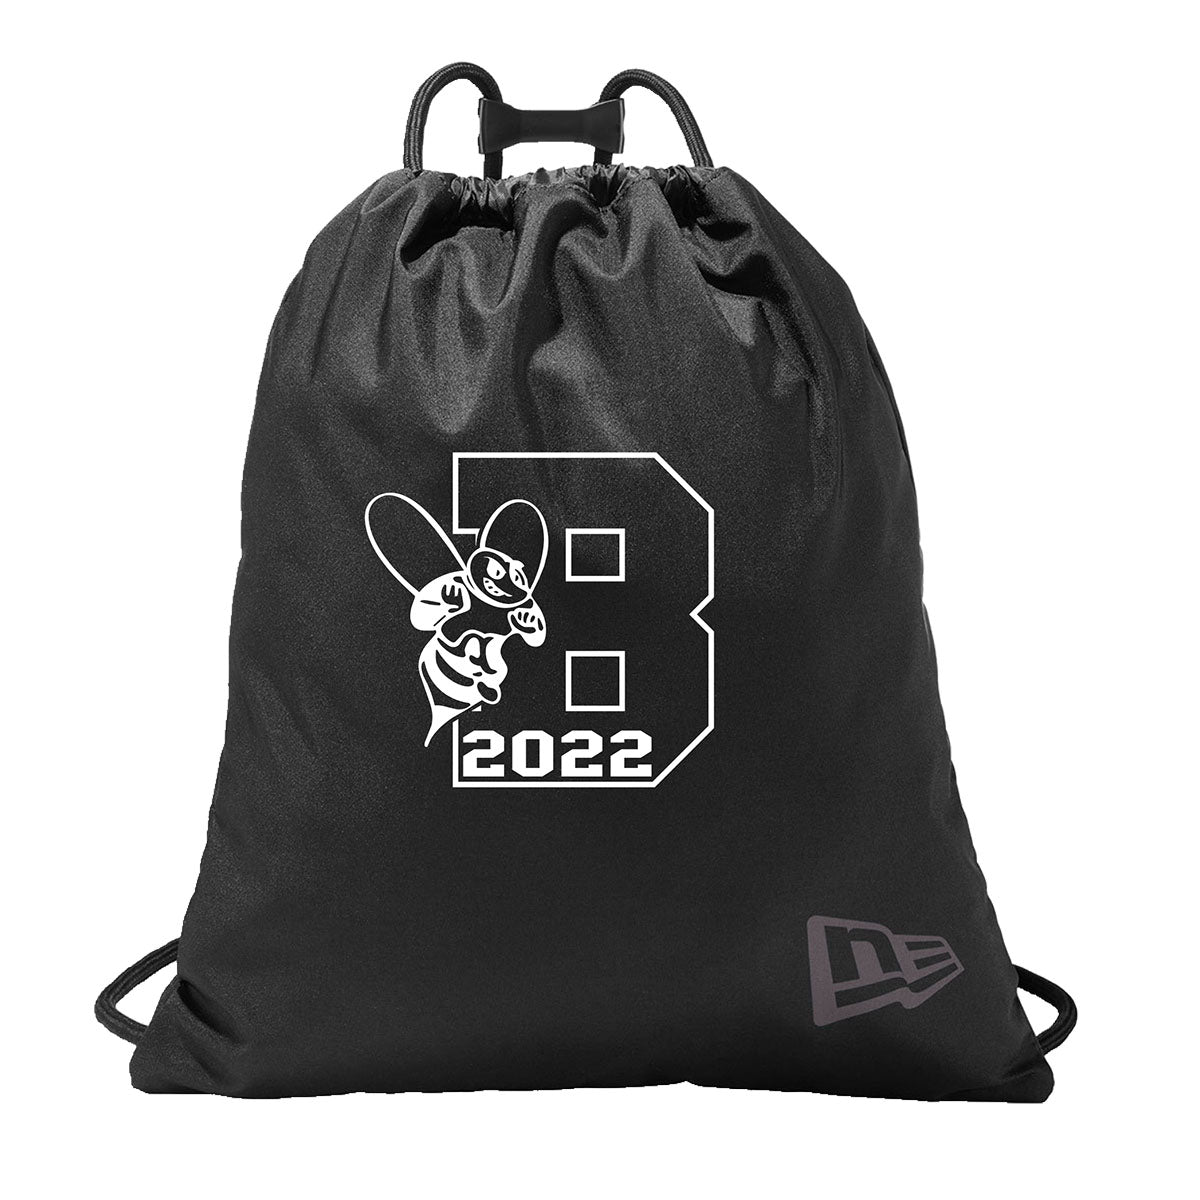 Varsity "B" 2022 Cinch Bags